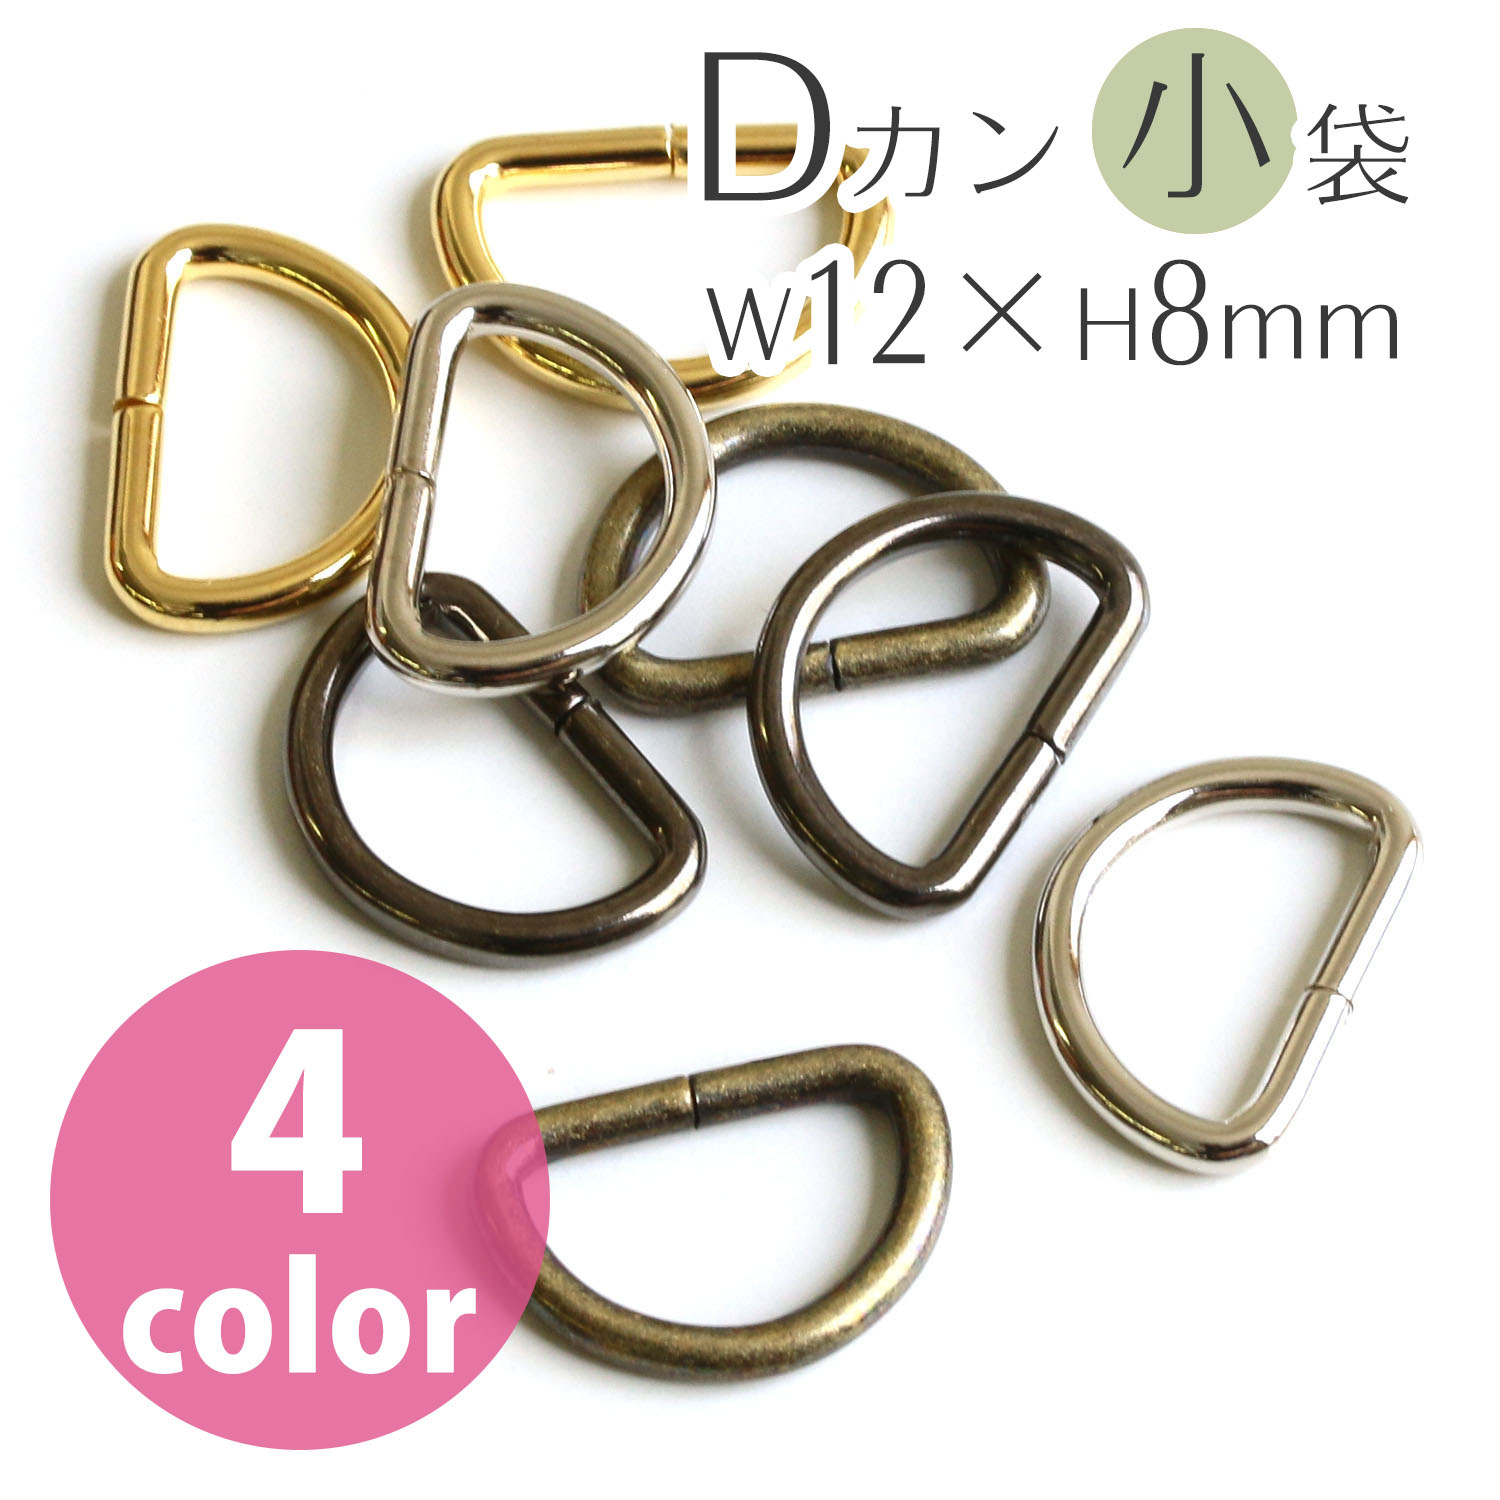 S22 D-Ring  12 x 8mm, diameter 2mm  (bag)